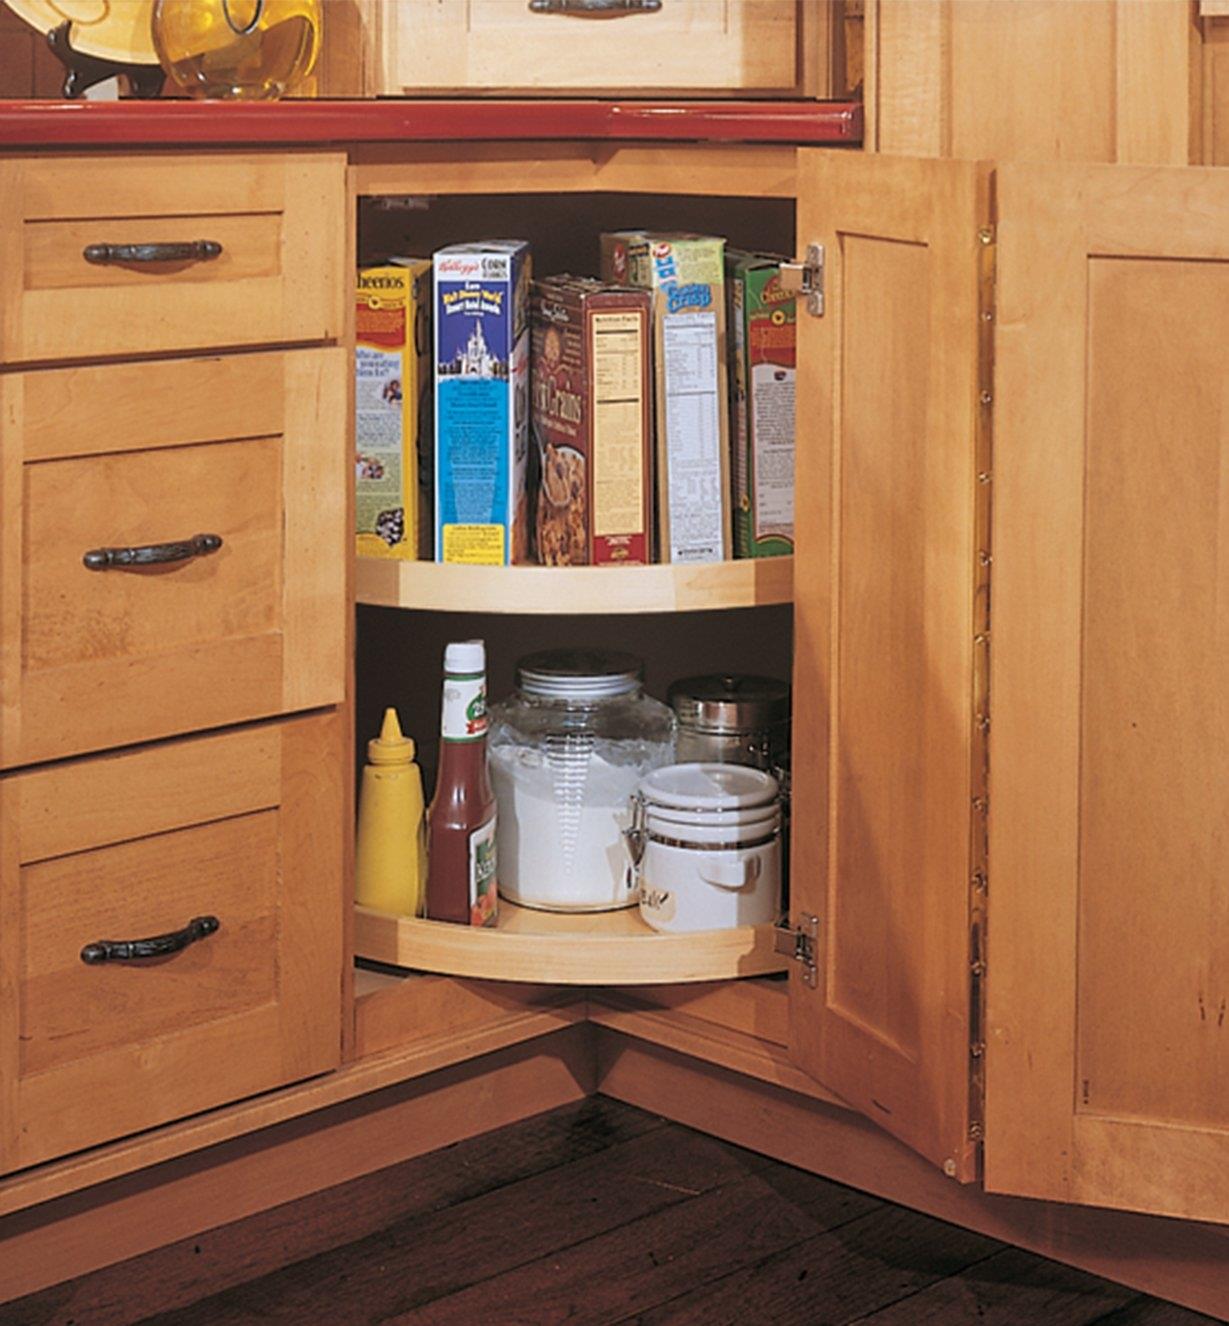 Example of kidney shelf installed in a corner kitchen cabinet